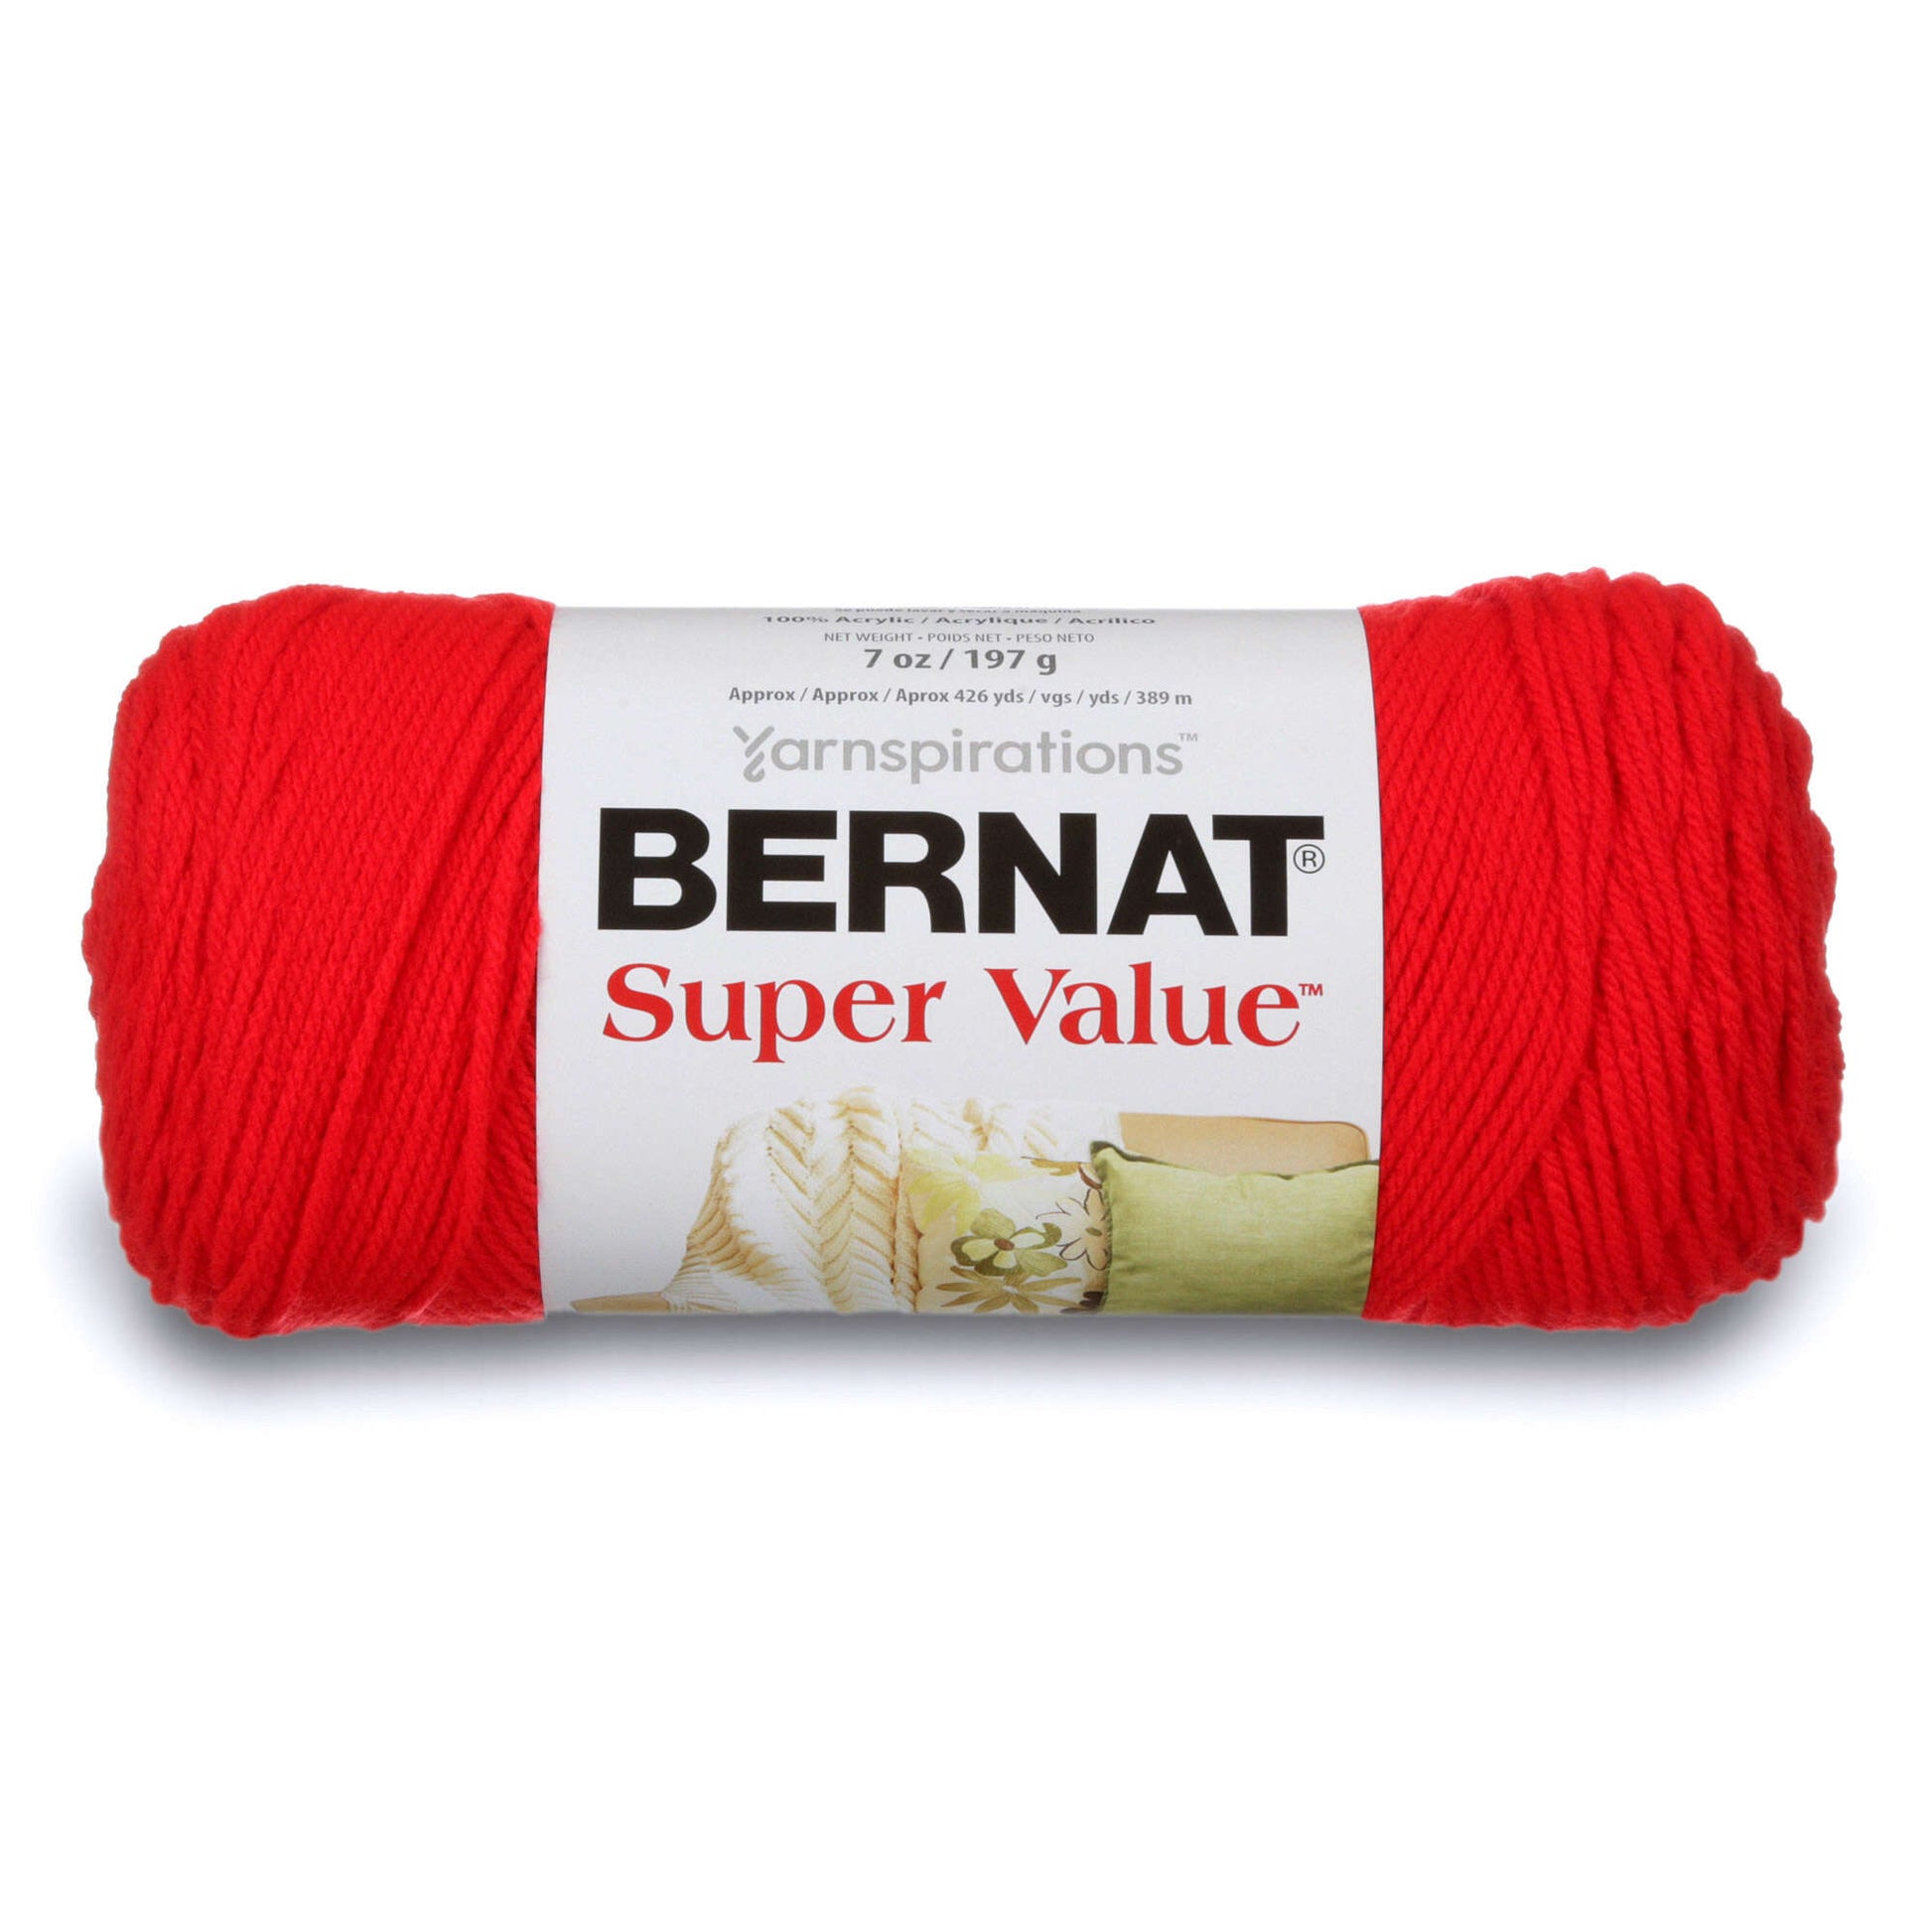 Bernat Super Value -  Norway